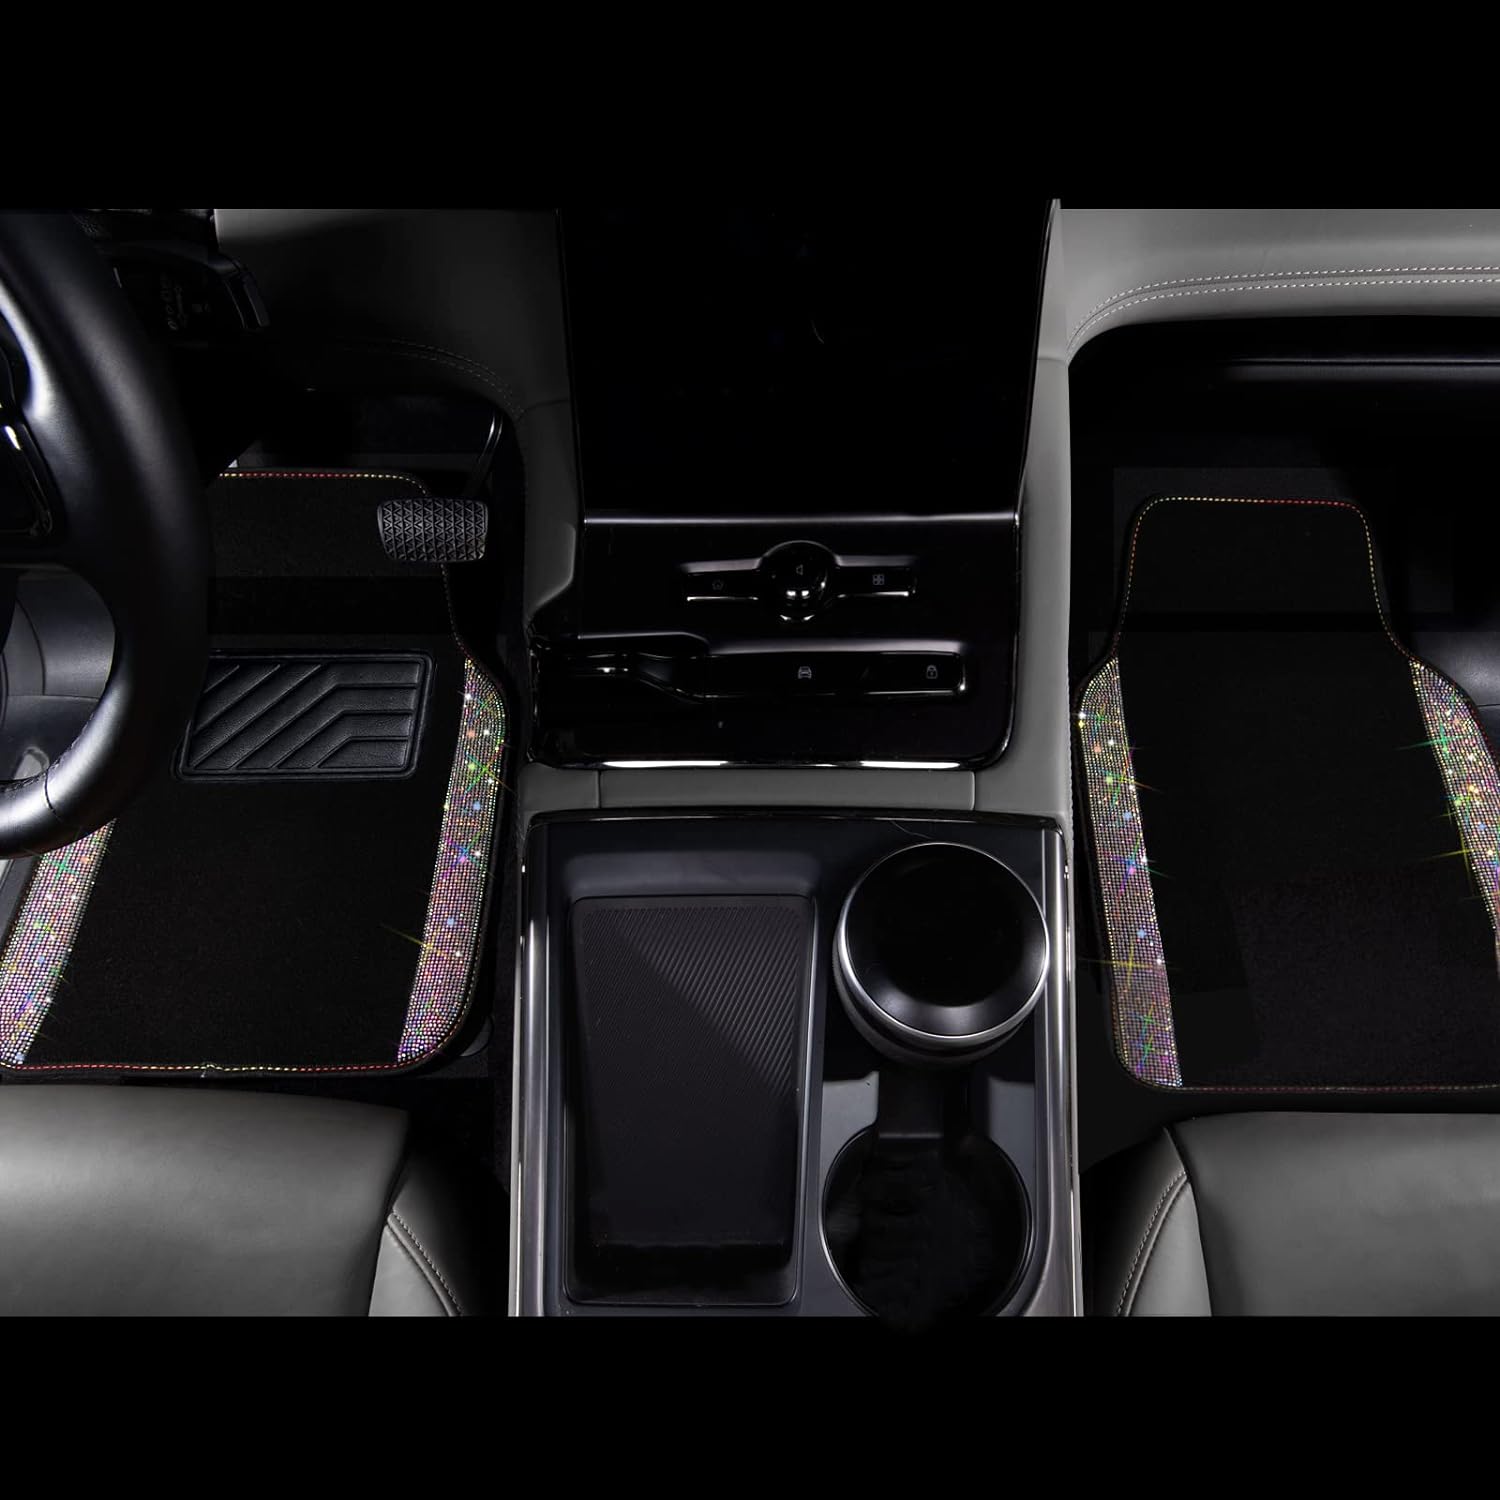 CAR PASS Bling Rhinestones Diamond Car Floor Mats & Nappa Leather Seat Covers Universal for Automotive SUV,Sedan Waterproof Heavy-Duty Anti-Slip